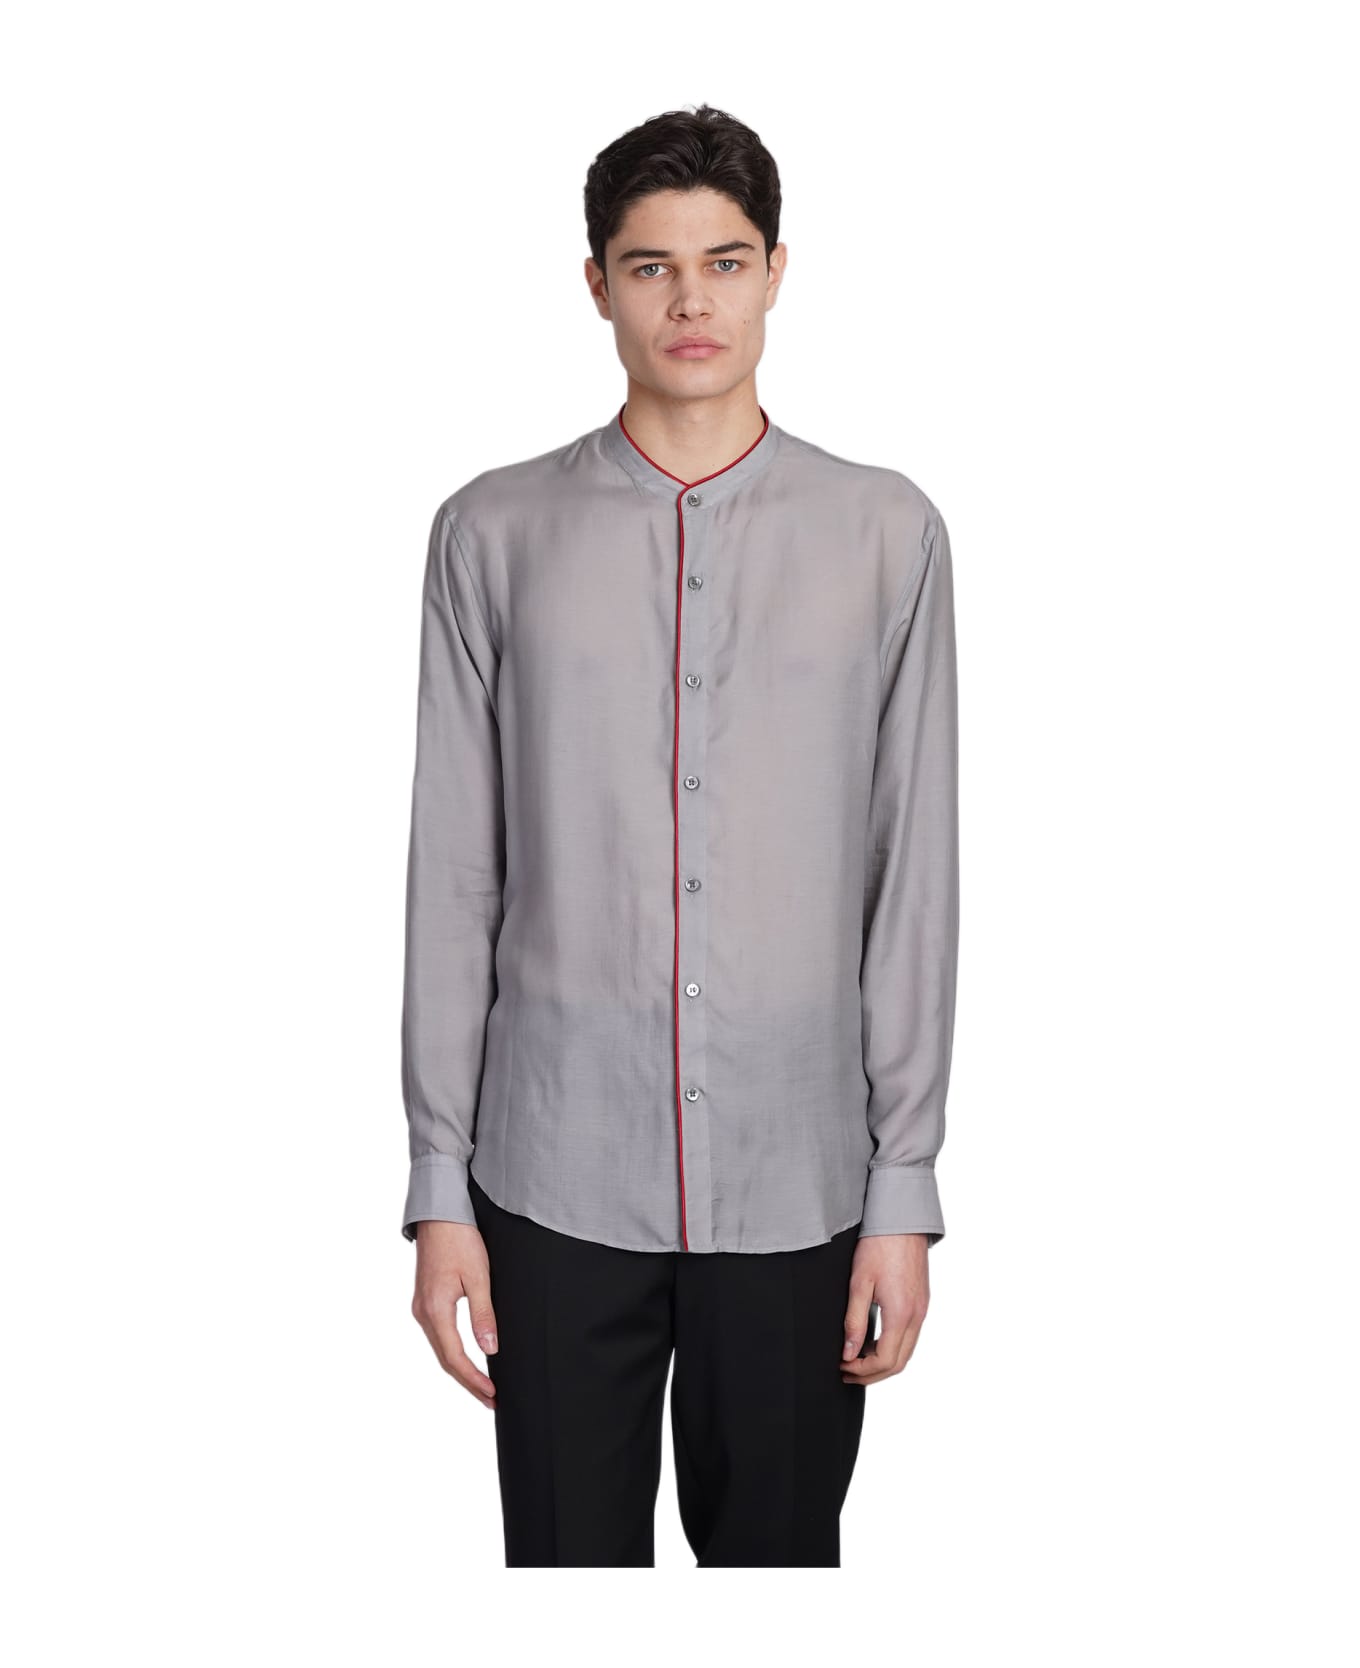 Giorgio Armani Shirt In Grey Wool And Polyester - grey